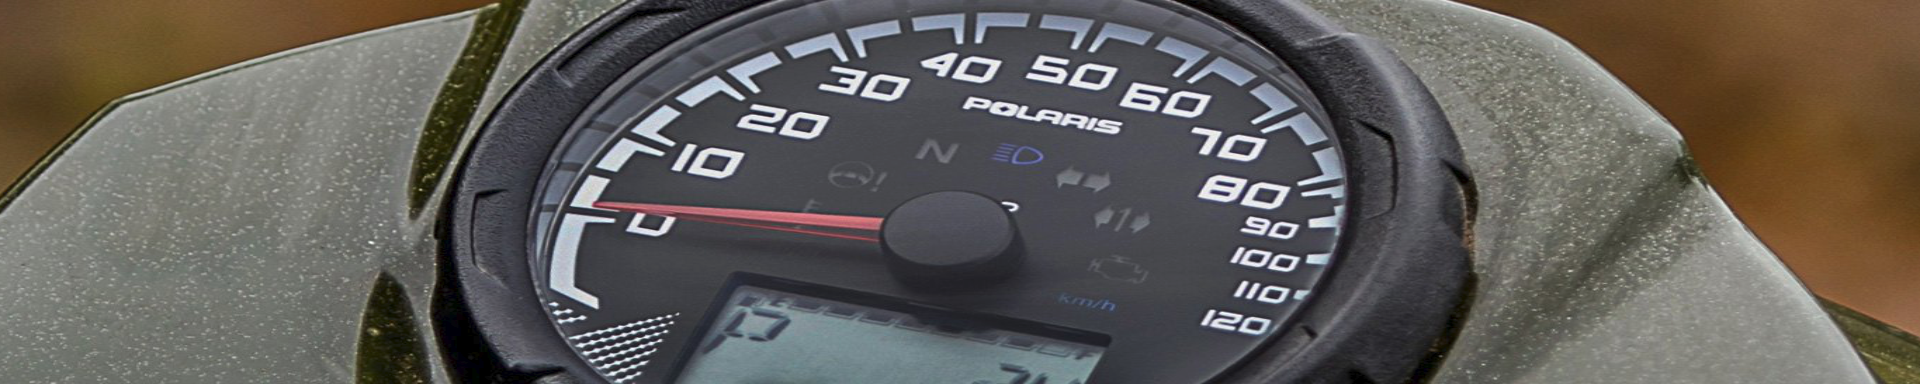 Speedometers | MunroPowersports.com | Munro Industries mp-100803010706